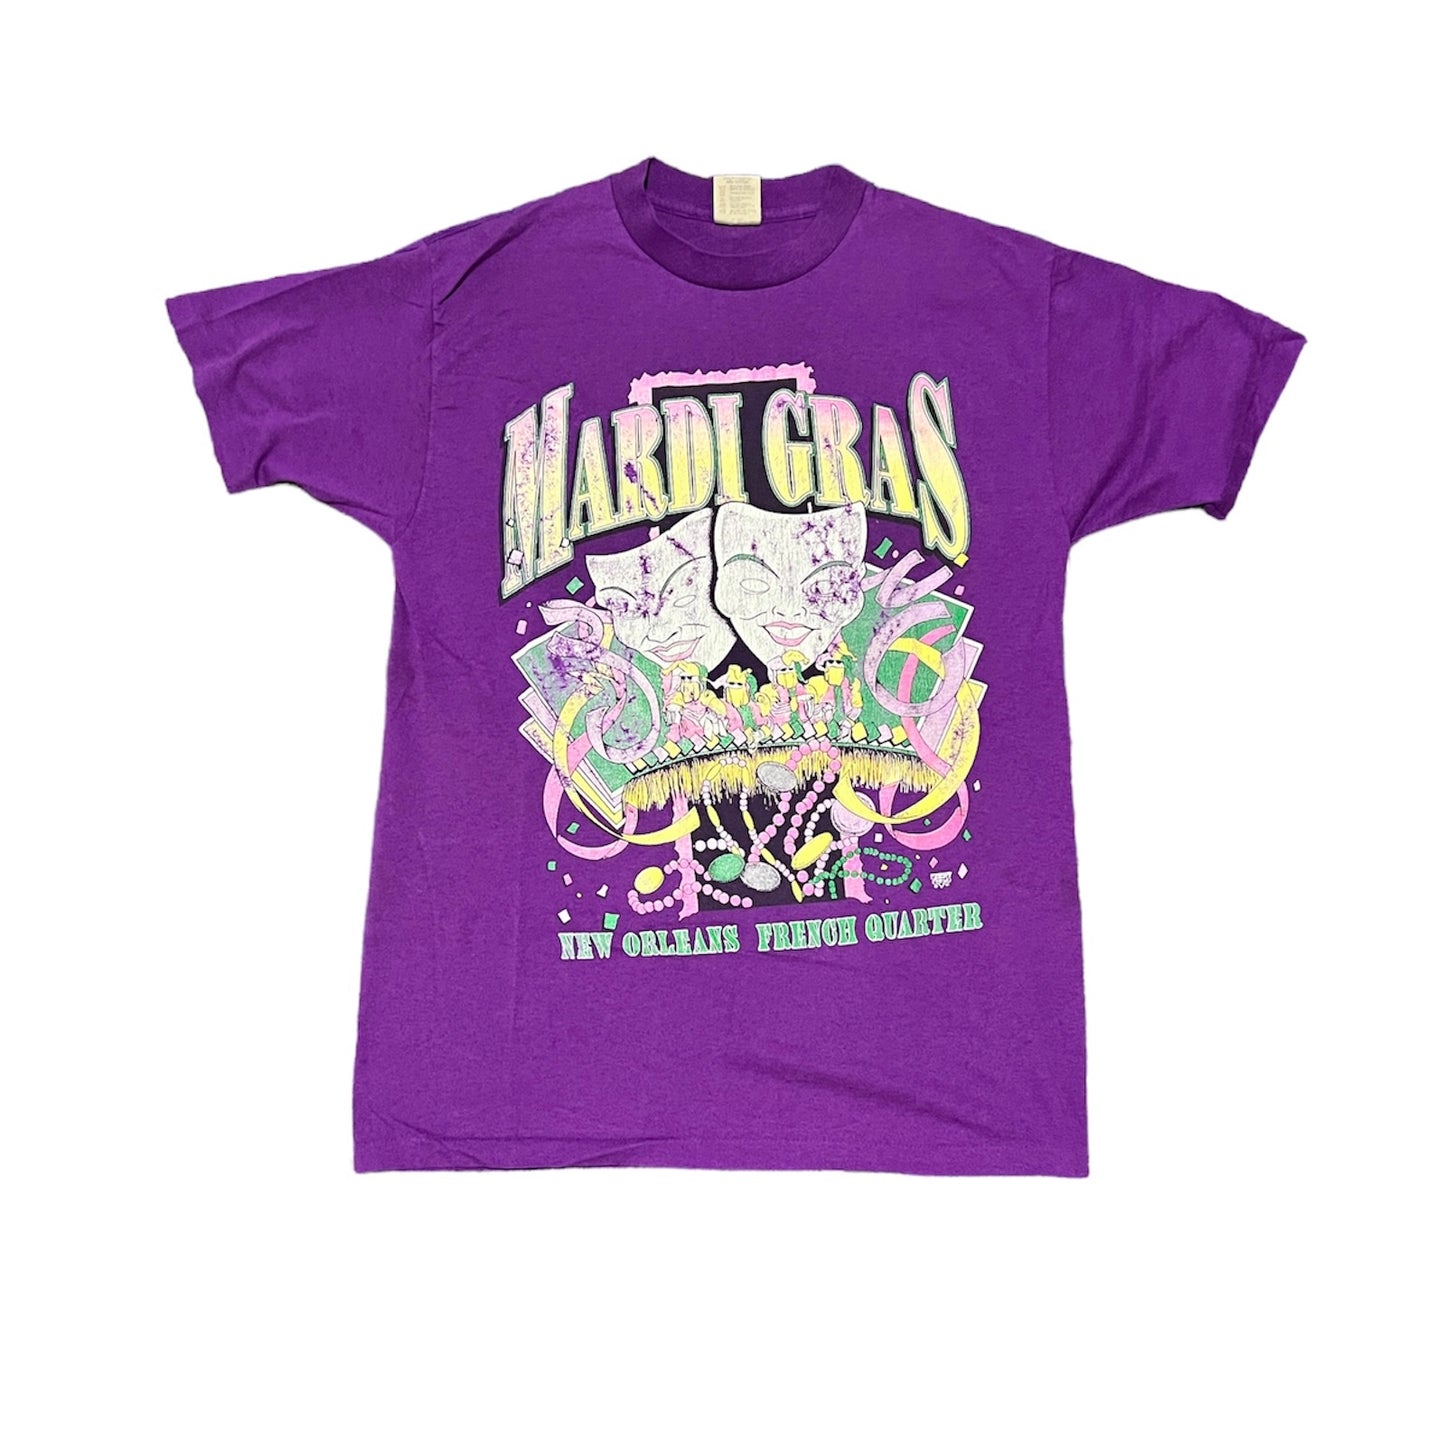 Mardi Gras Vintage T-Shirt Size Large